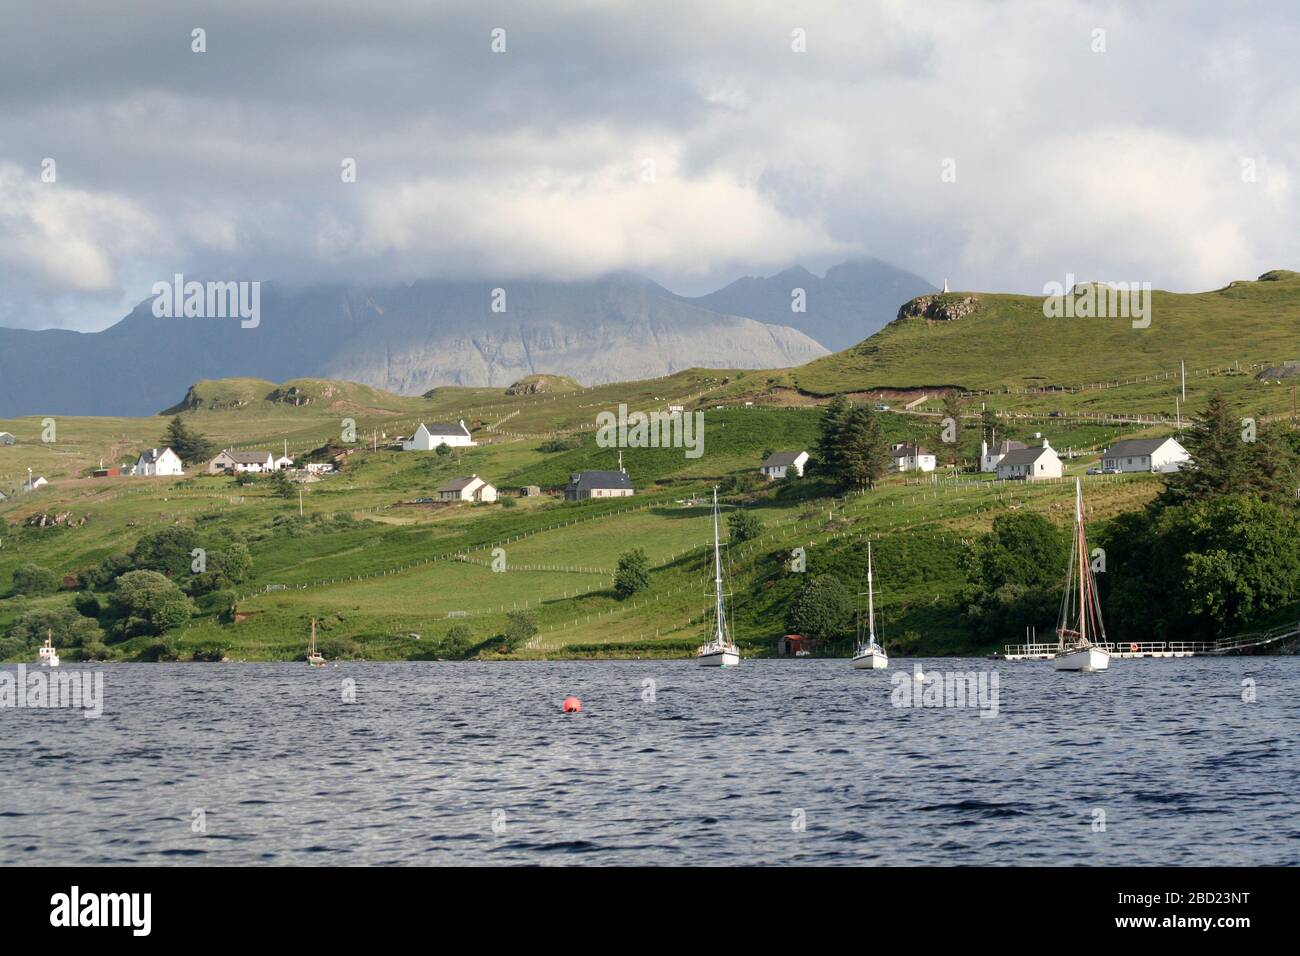 Sailing yachts on moorings at Carbost village, near Talisker distillery, Loch Harport, Isle of Skye, Hebrides, Scotland Stock Photo